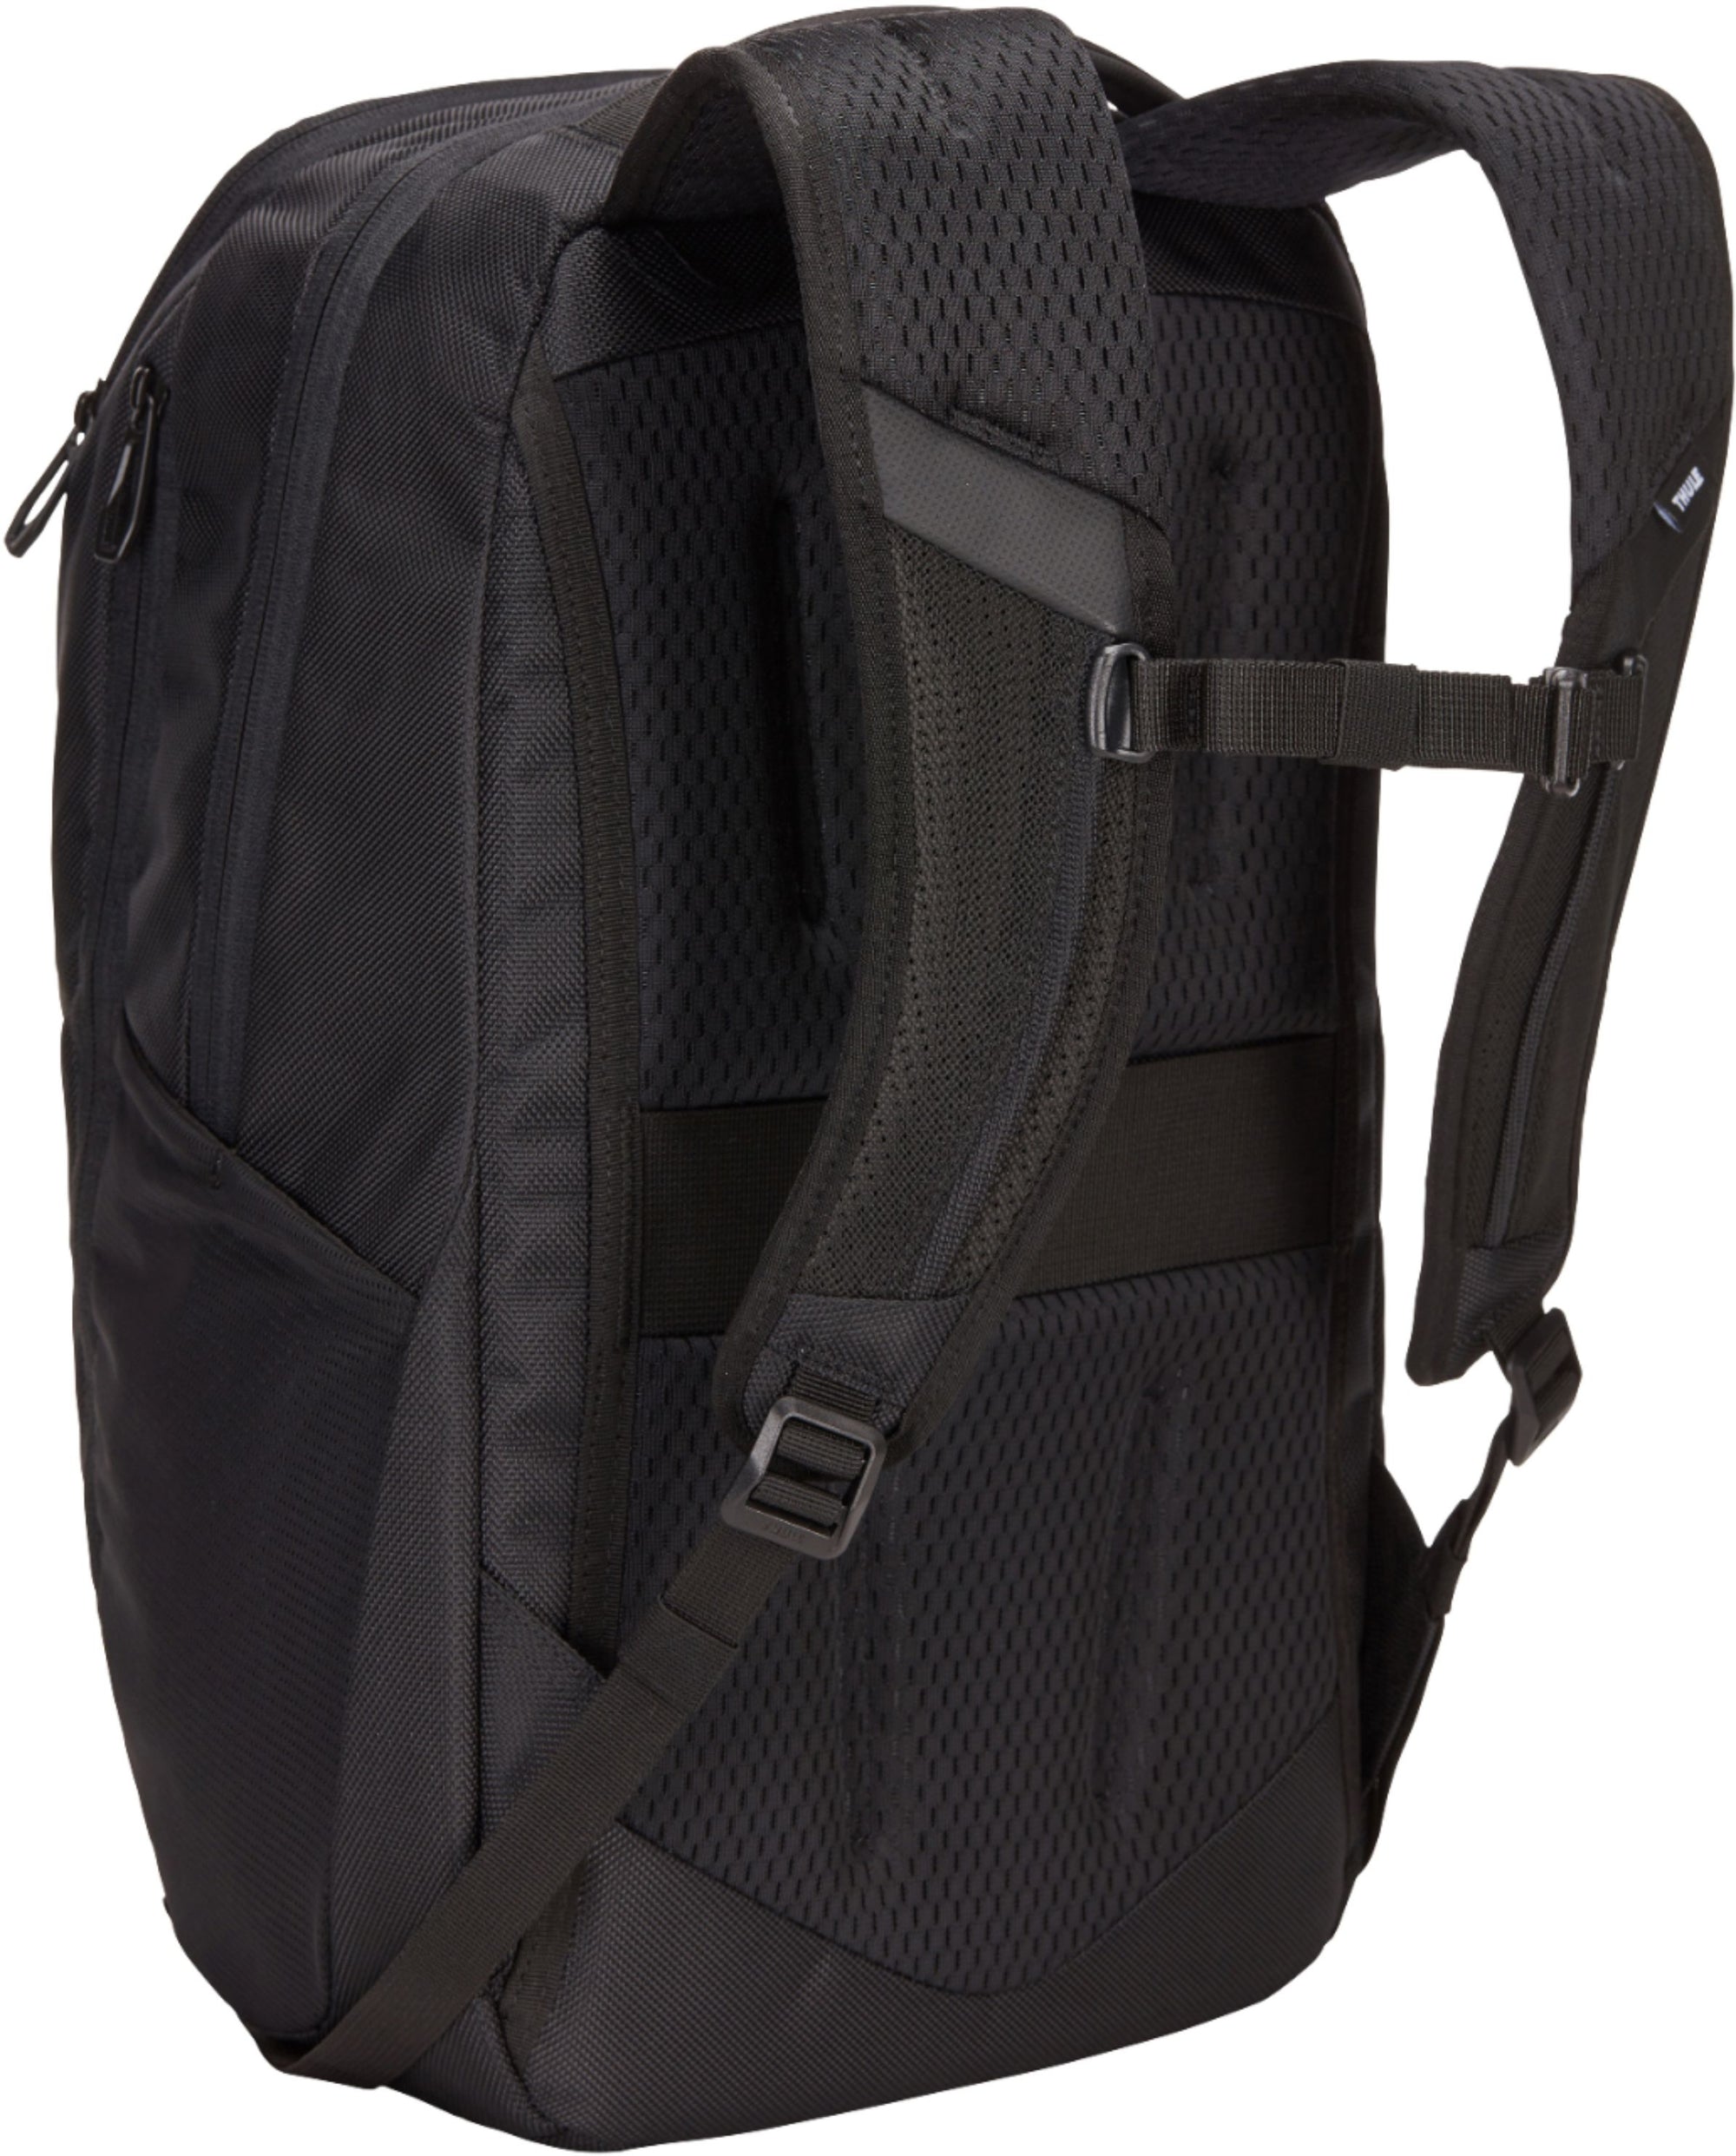 Thule - 3203965 Accent Backpack 23L Bundle for 15.6" Laptop w/ Subterra PowerShuttle, 10" Tablet Sleeve, SafeZone, & Water Bottle Holder- Black